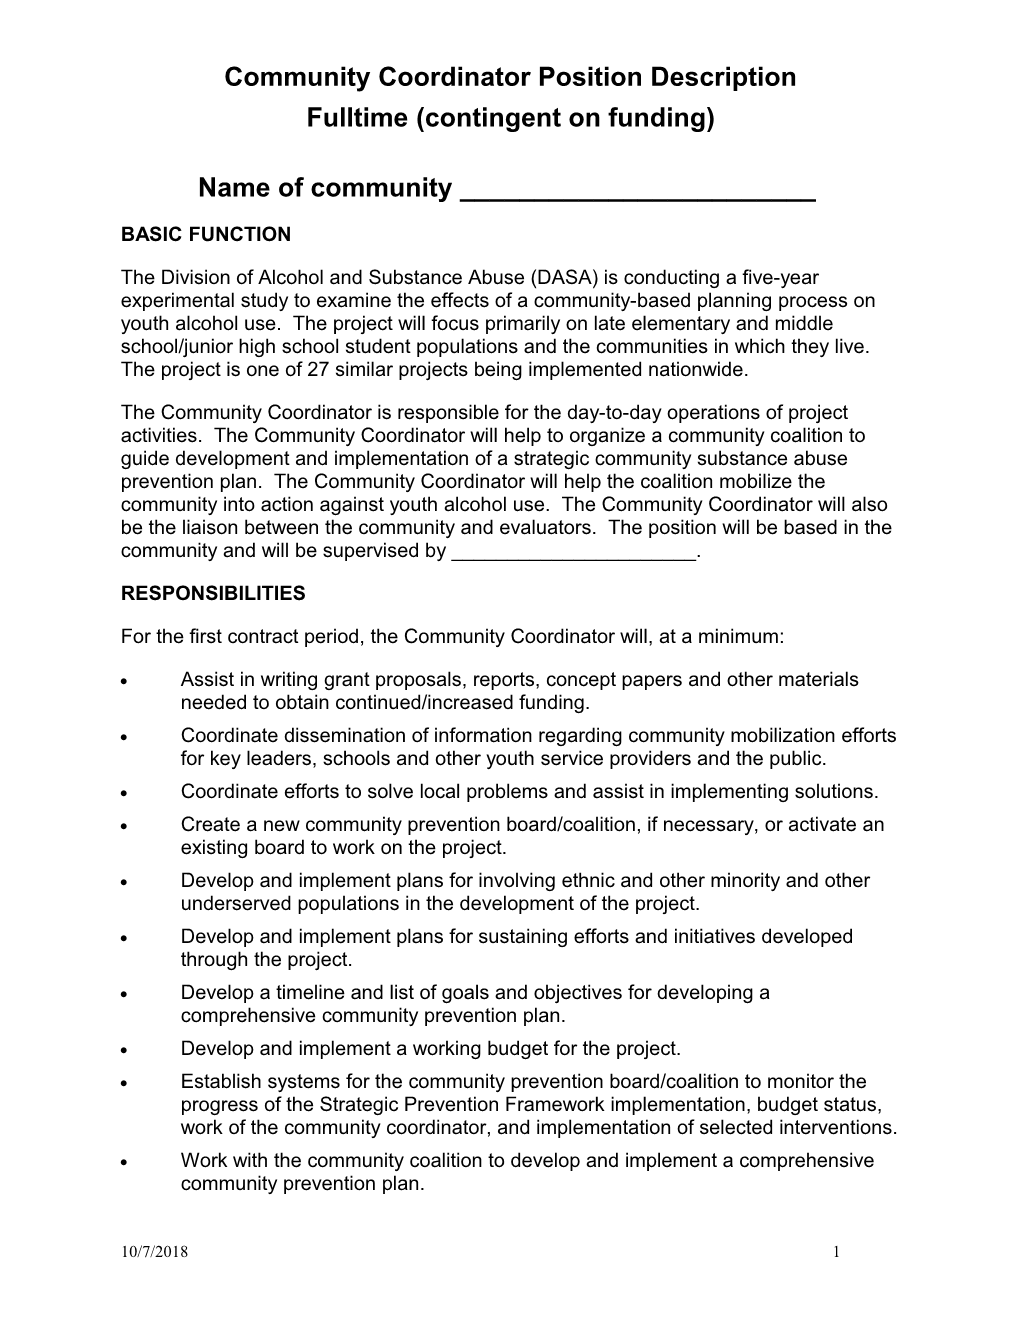 Community Coordinator Position Description